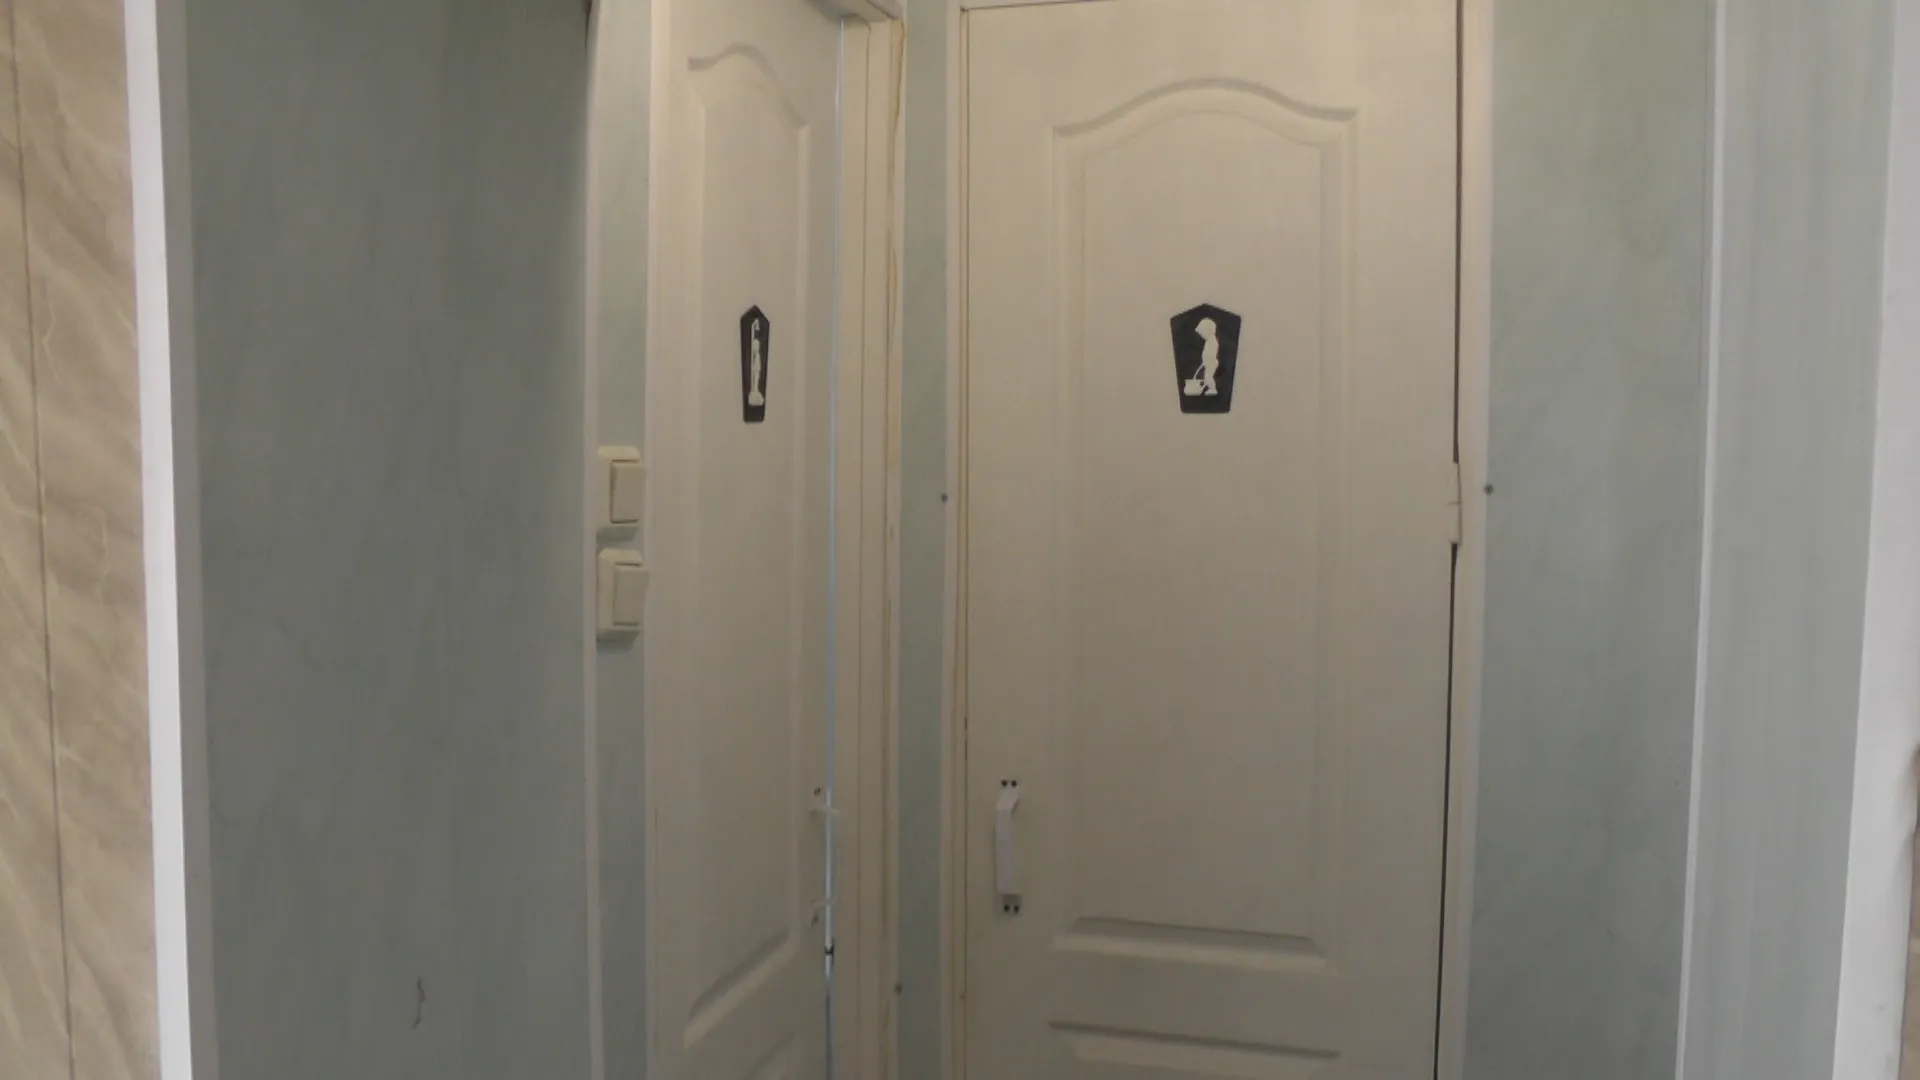 Ванная комната и туалет общие на этаже